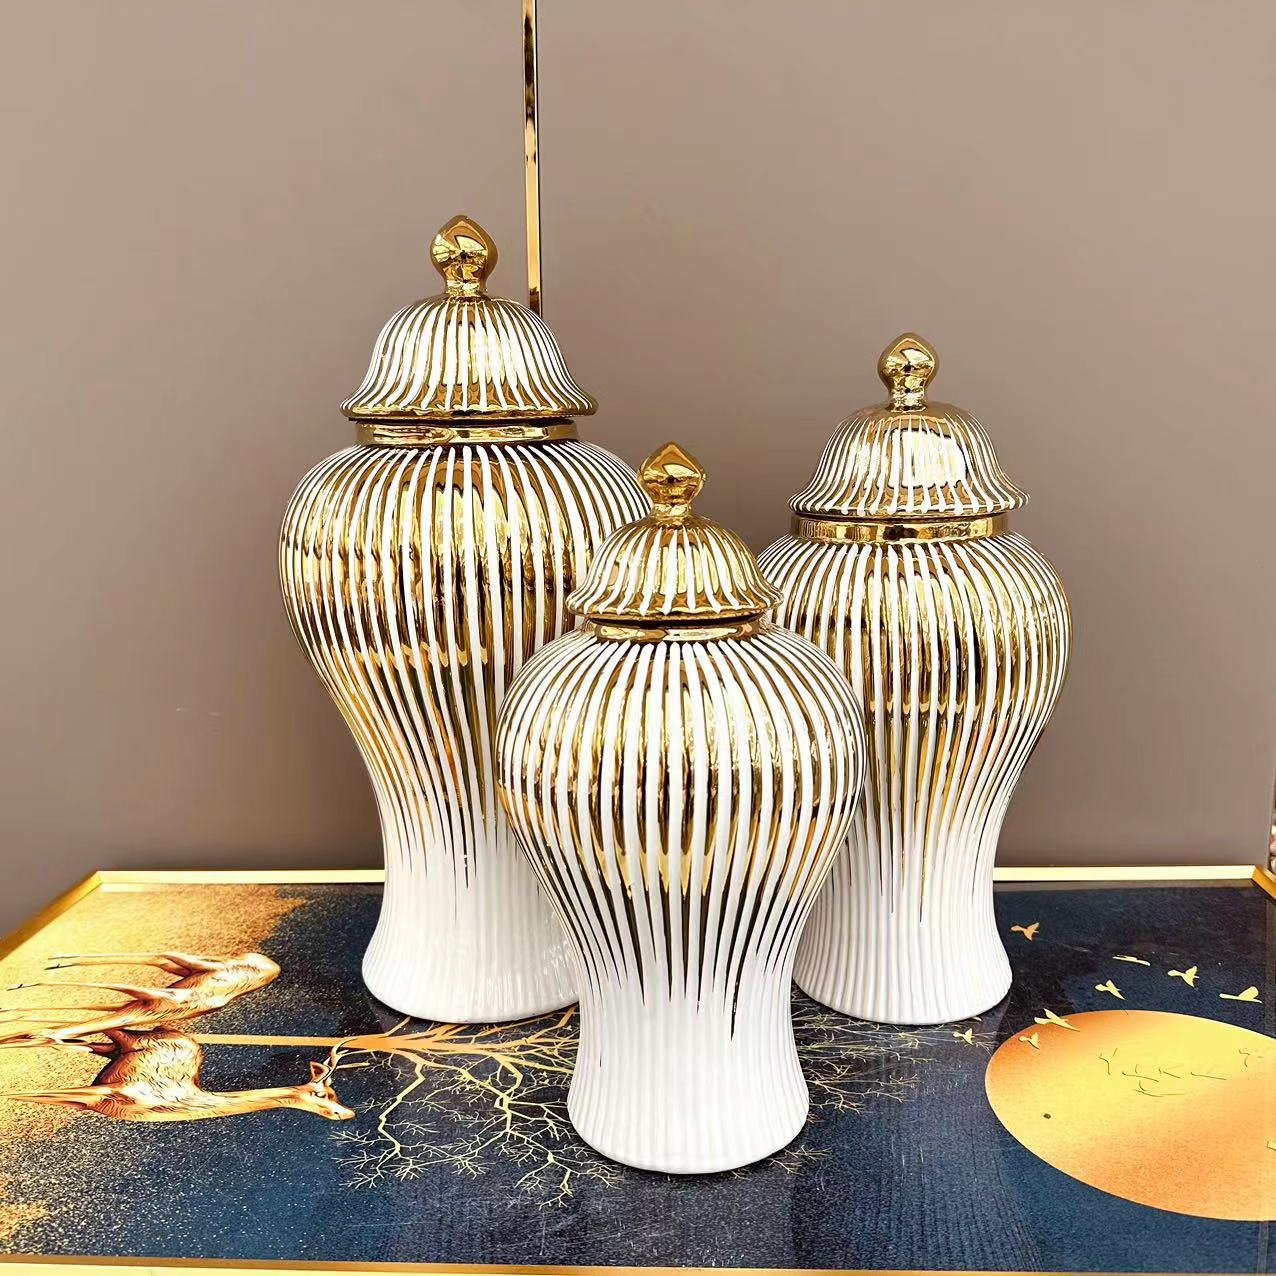 Ceramic Light Luxury Electroplating Temple Jar European Flower Vase Crafts Decoration Hallway Soft Outfit Decorative Storage Jar